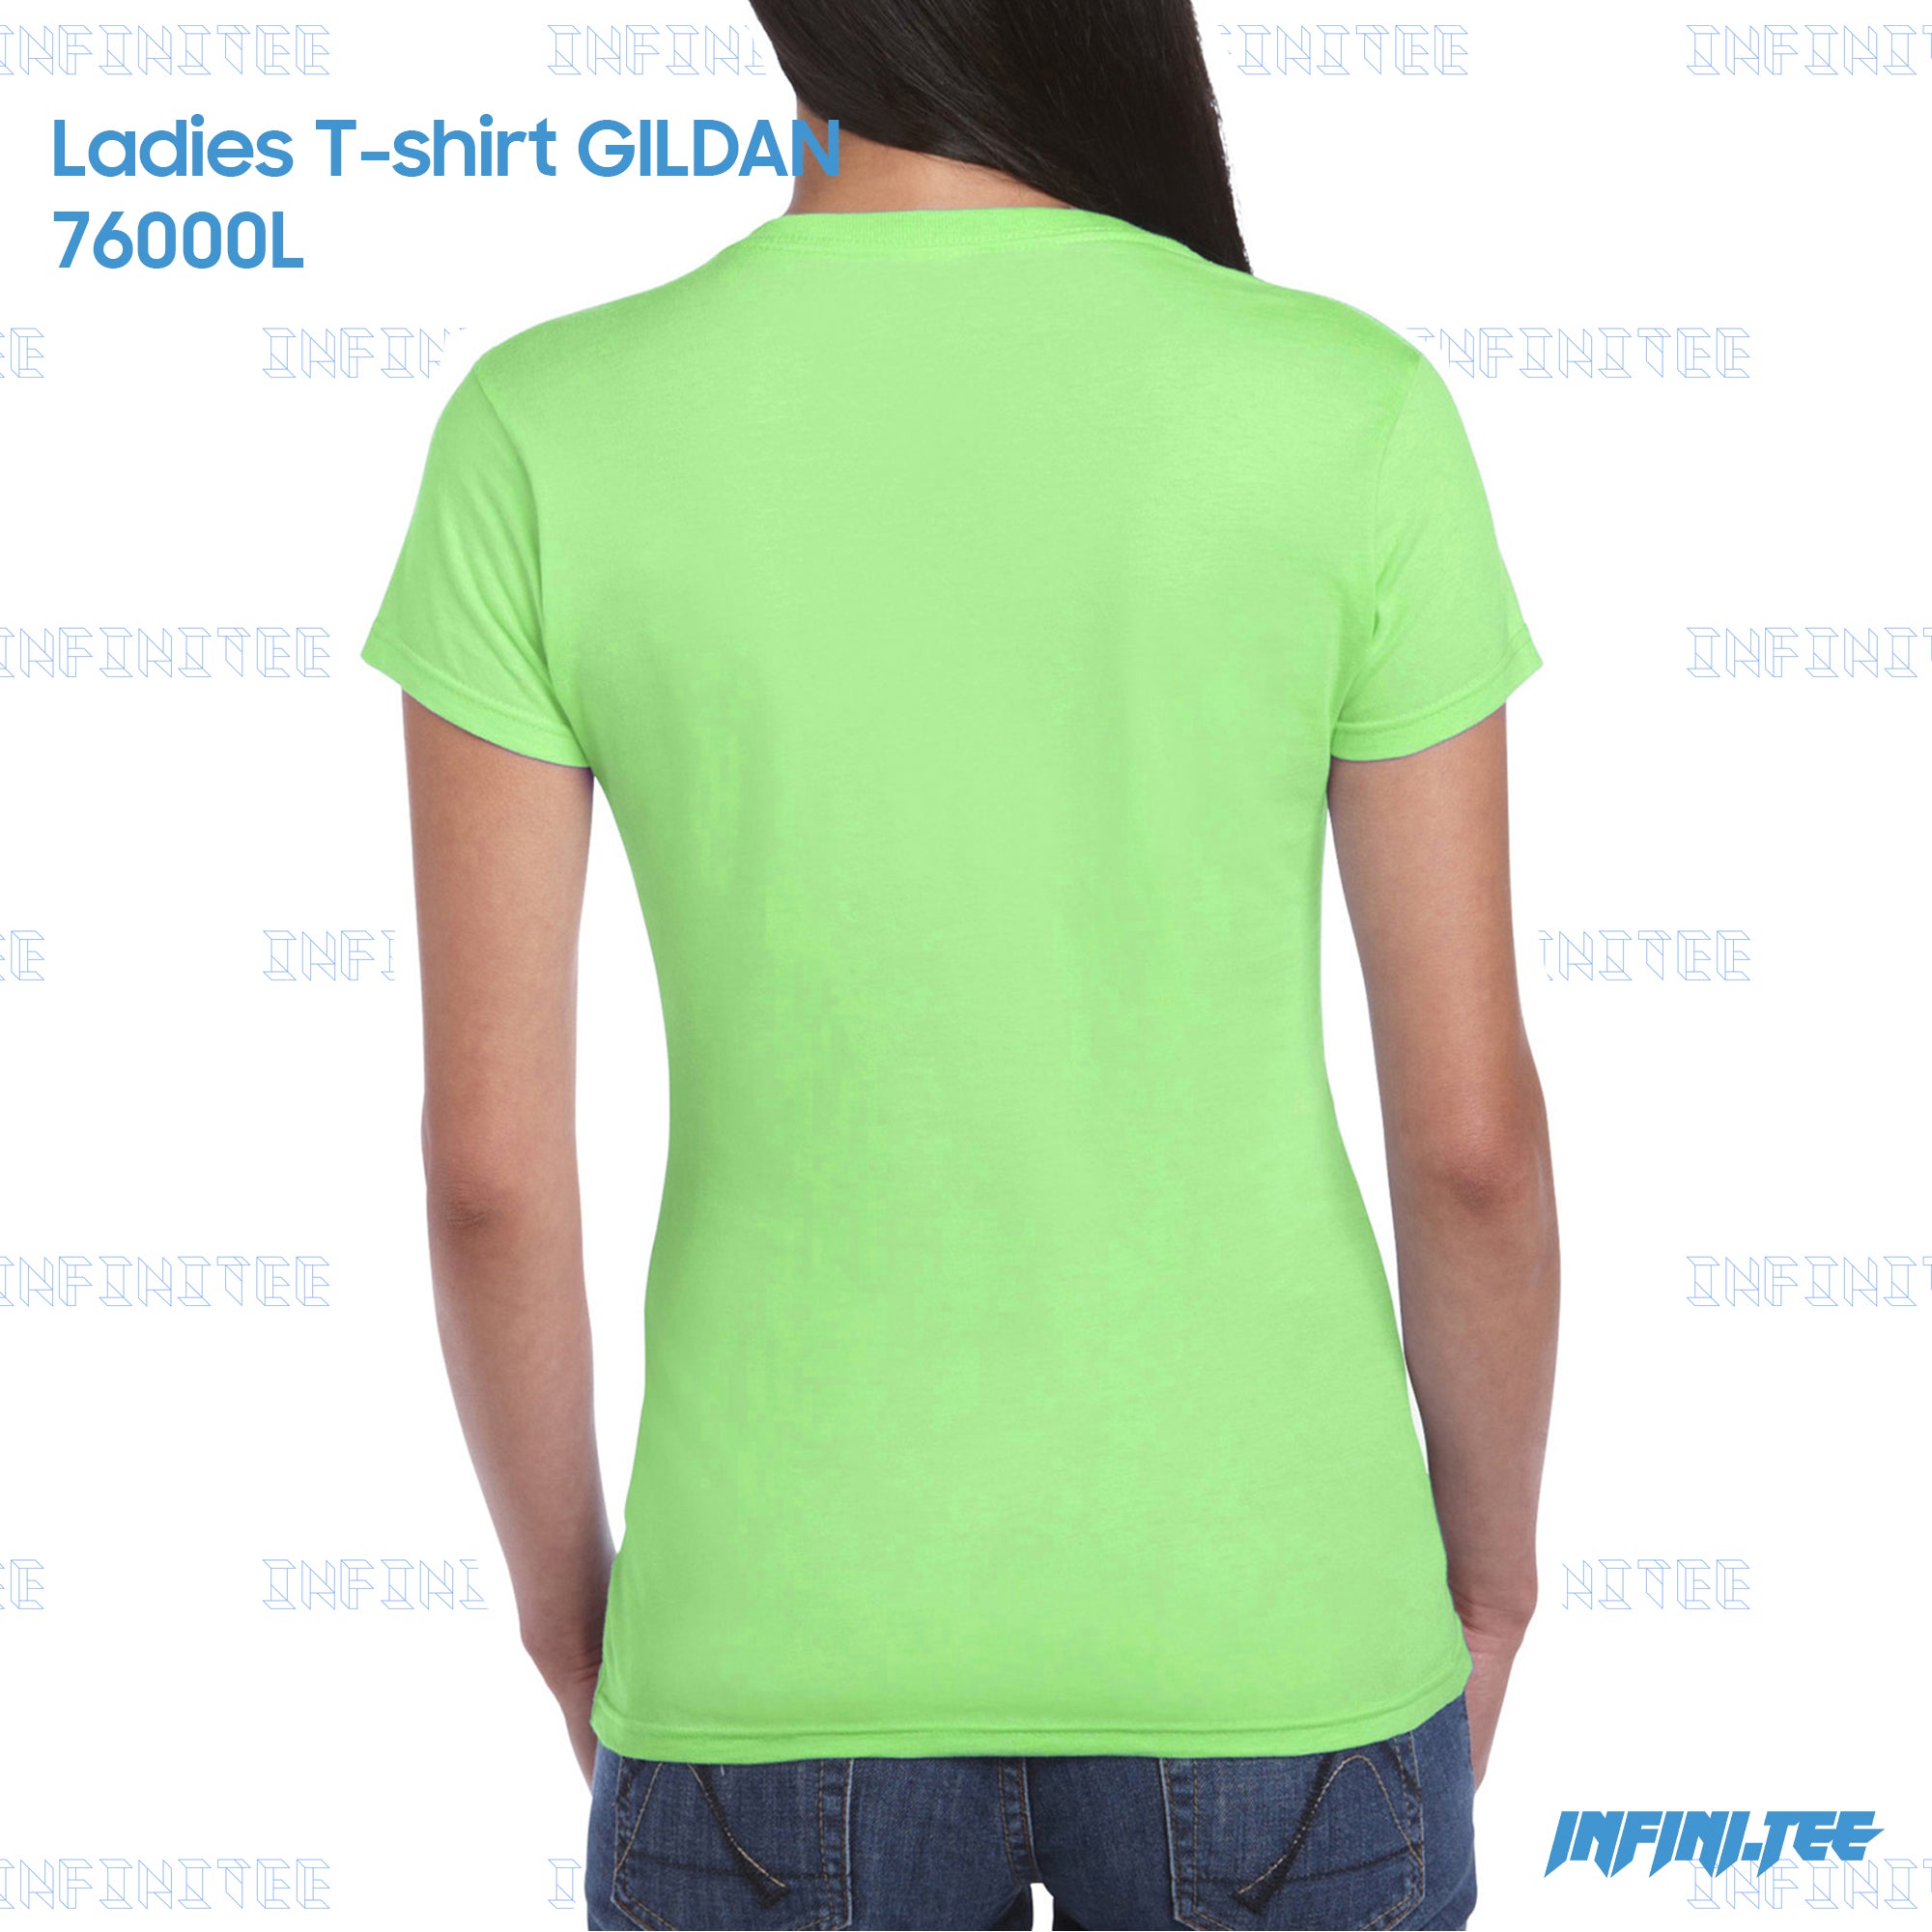 Ladies T-shirt 76000L GILDAN - LIME